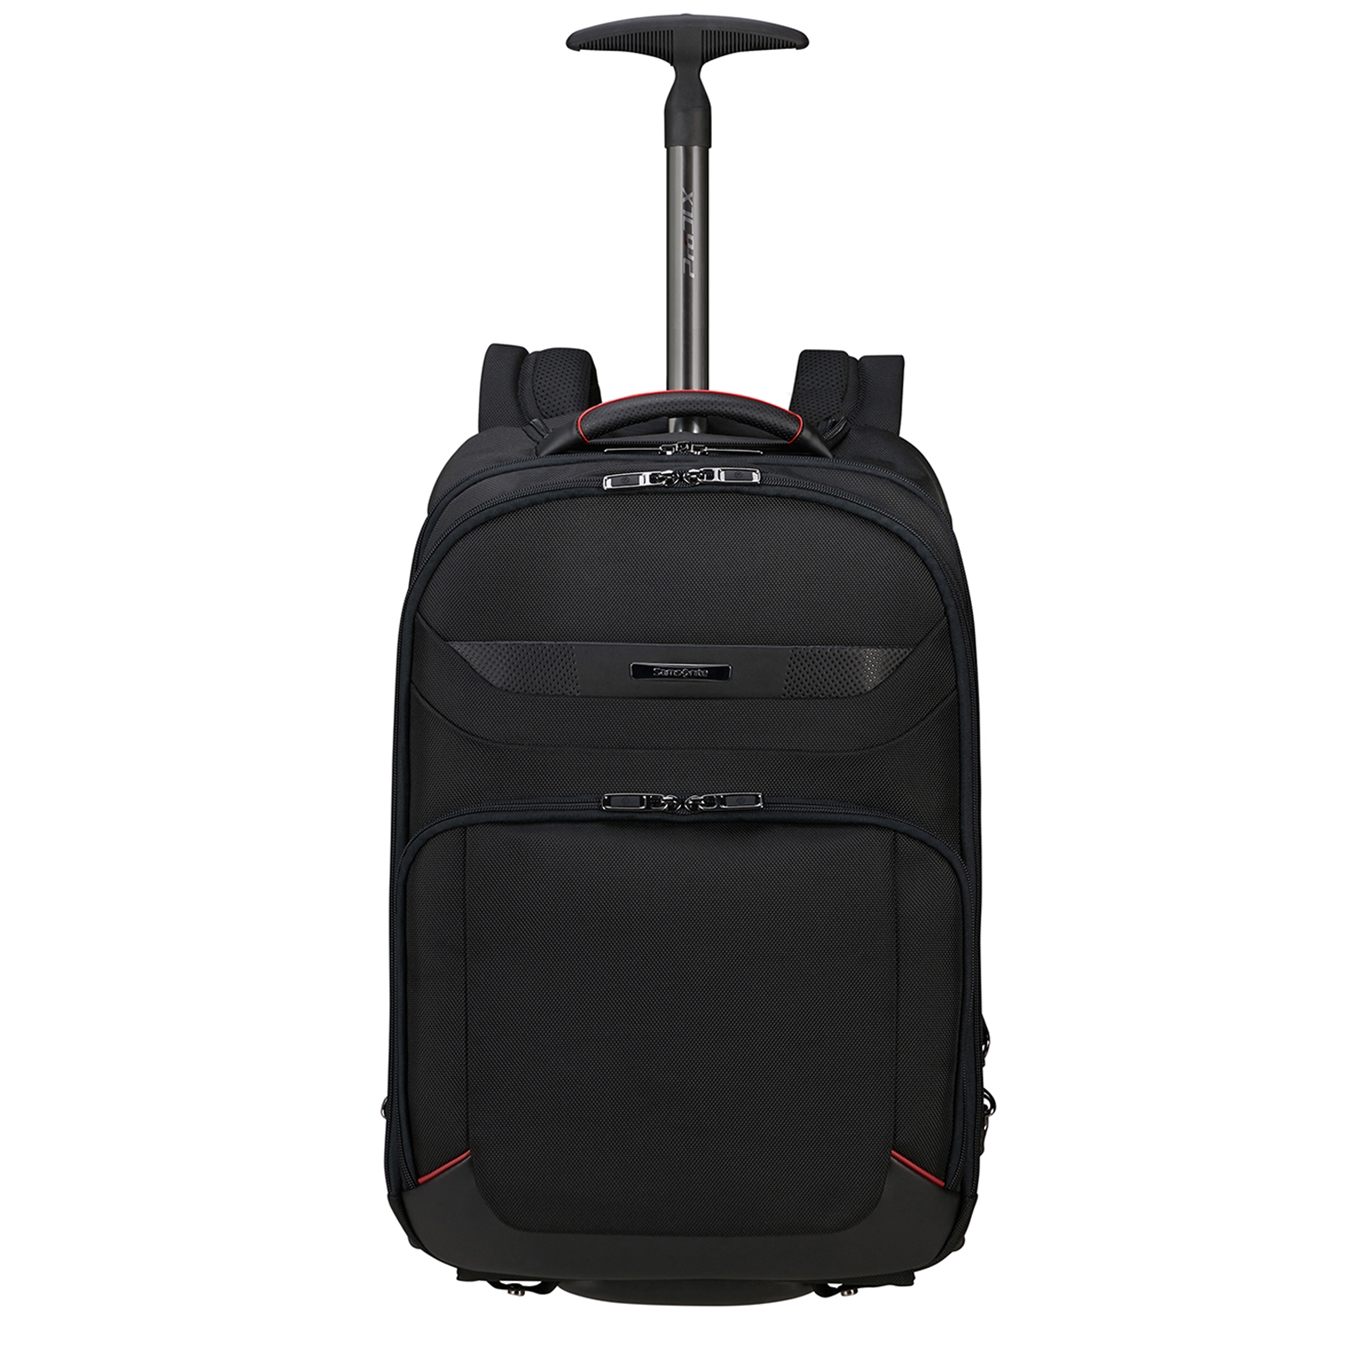 Samsonite Pro-DLX 6 Laptop Backpack Wheels 17.3" black backpack